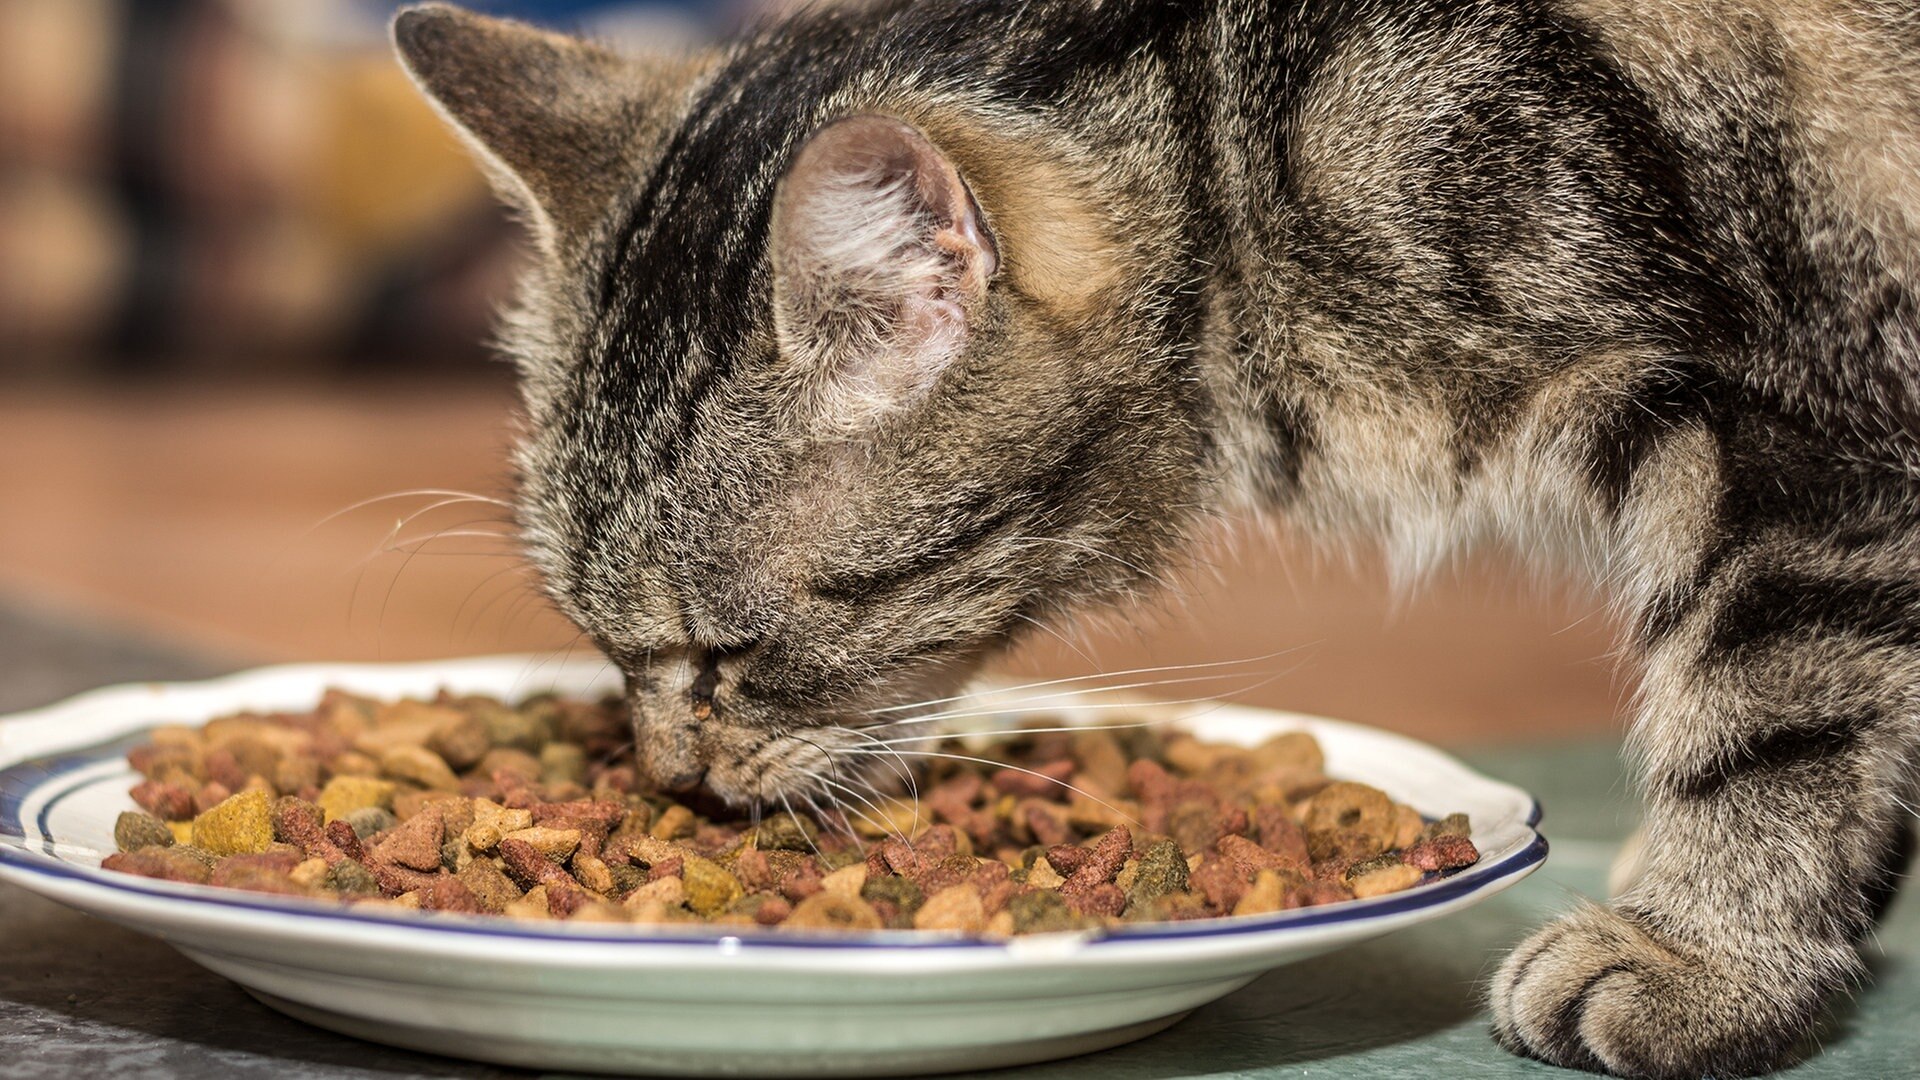 Gesundes Katzenfutter Auf Nahrstoffe Achten Ndr De Ratgeber Verbraucher